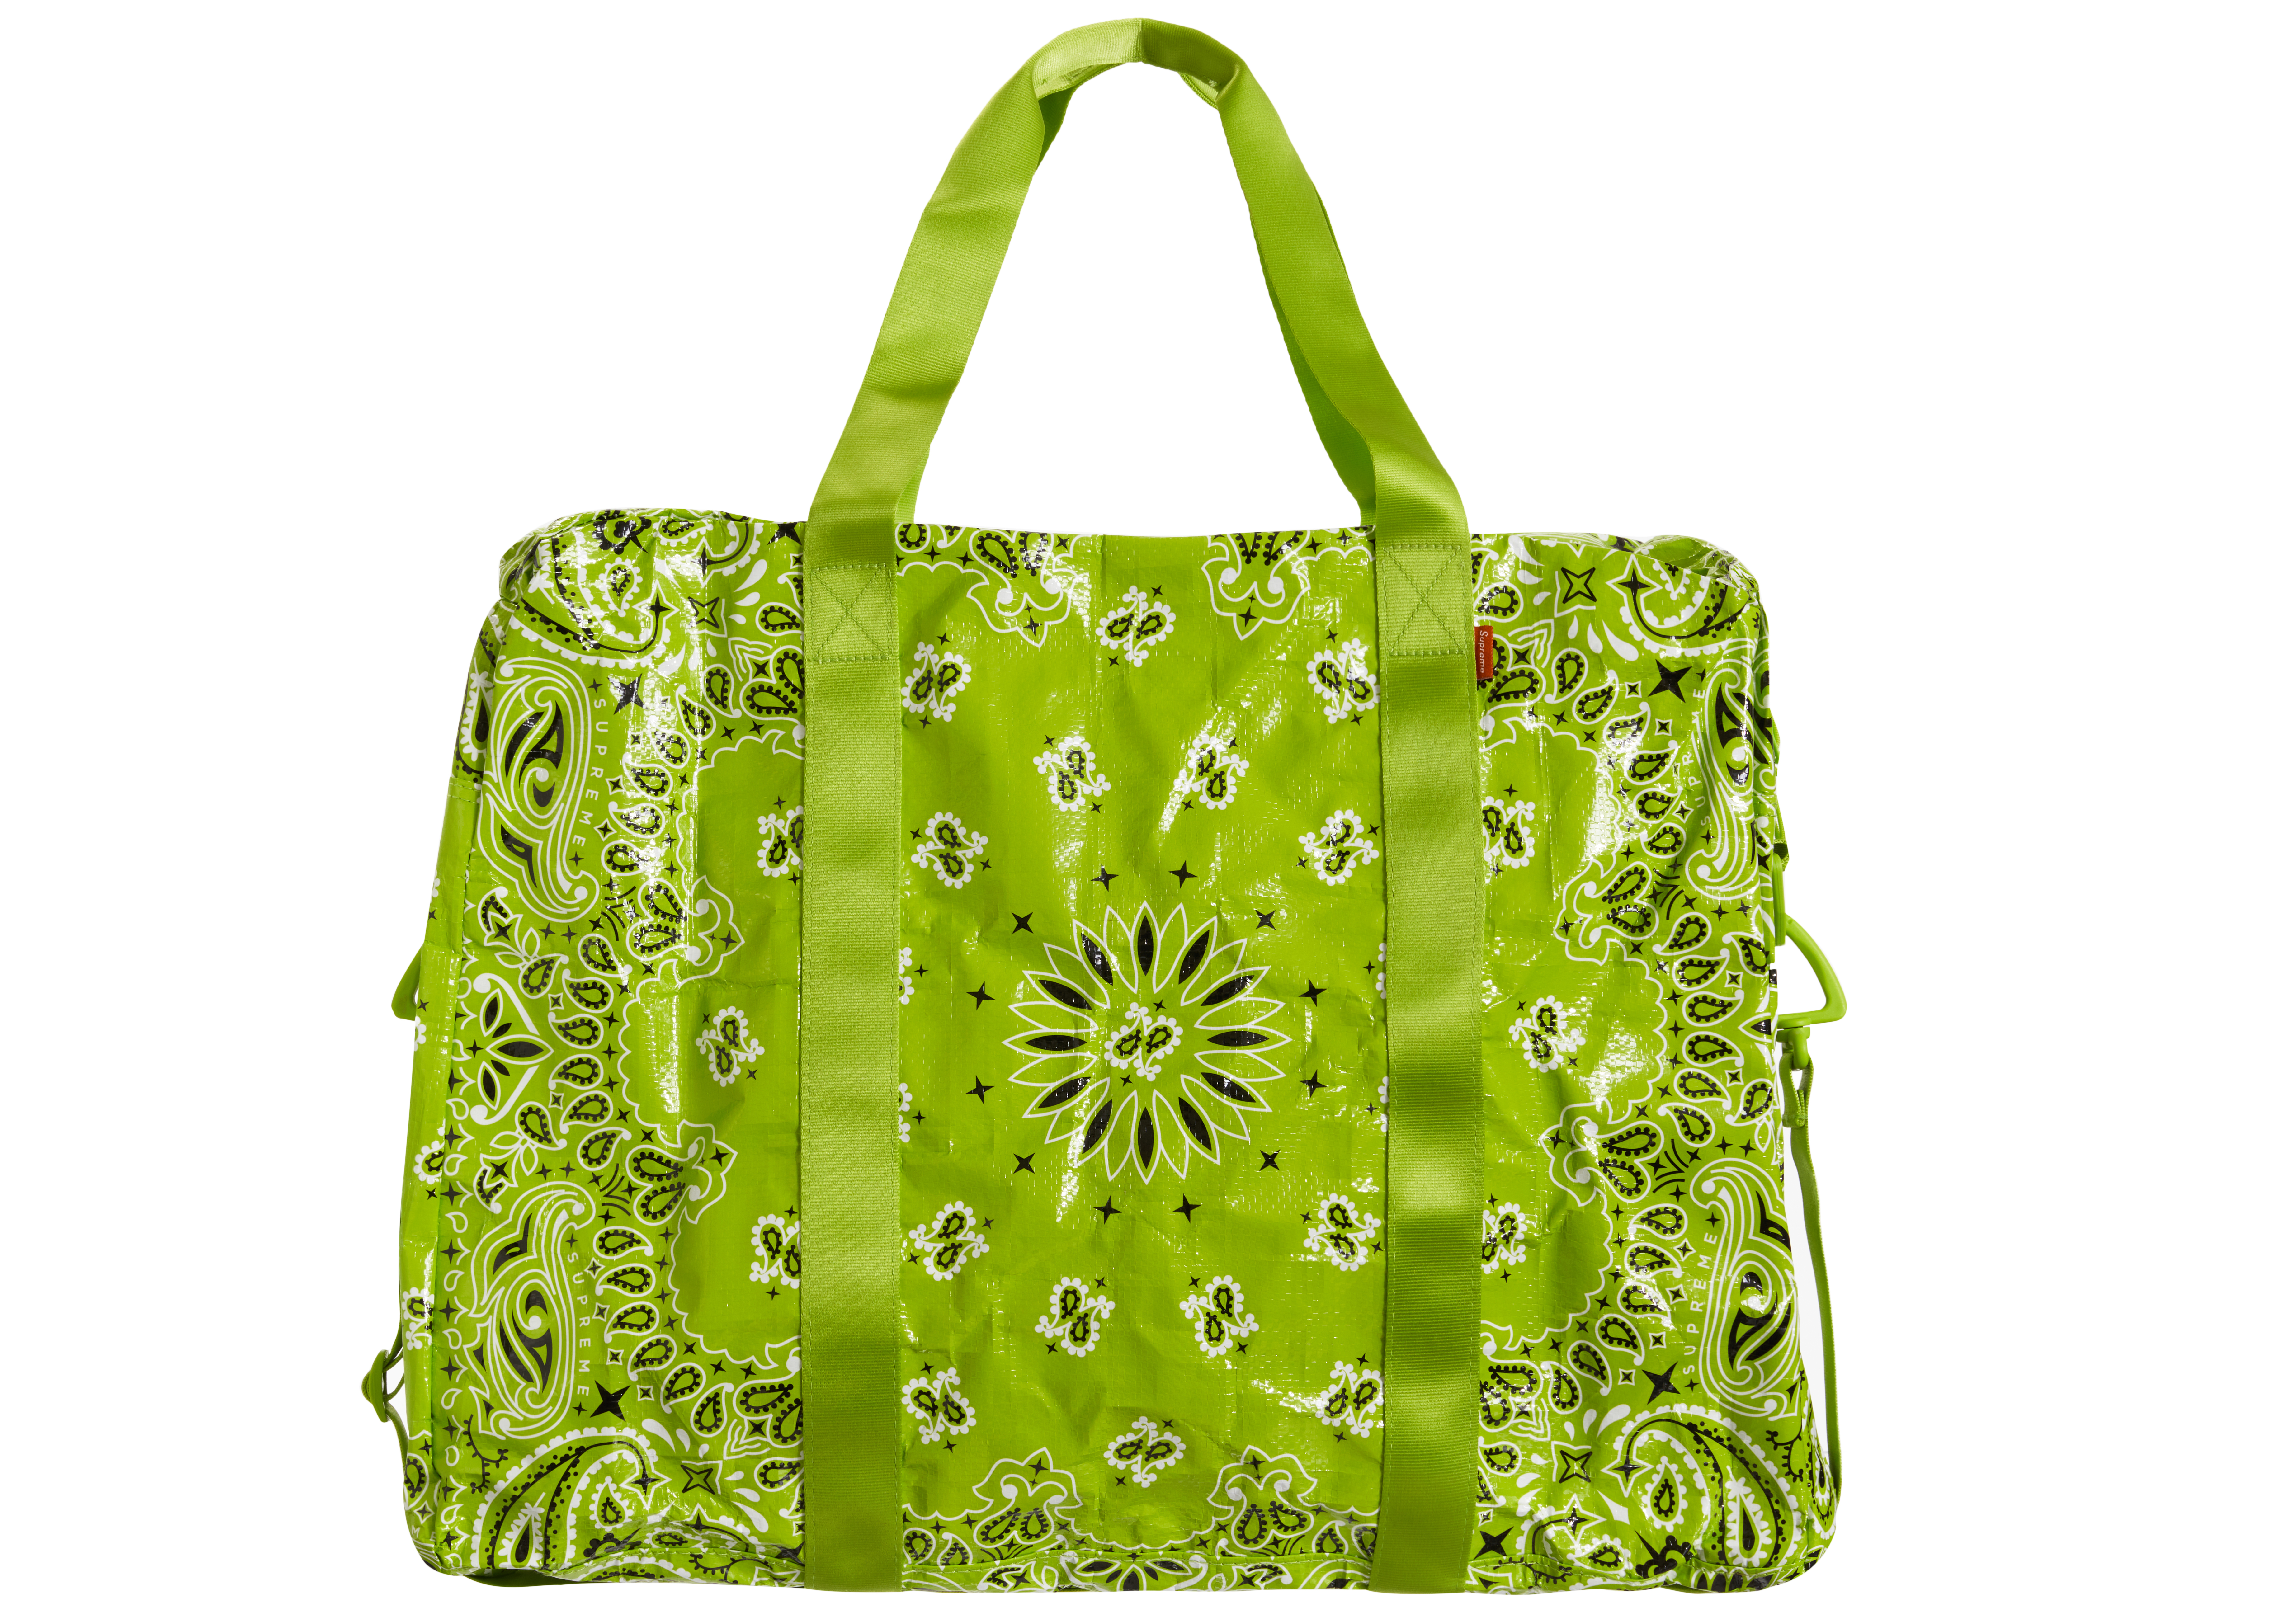 Supreme Bandana Tarp Large Duffle Bag Bright Green - SS21 - US